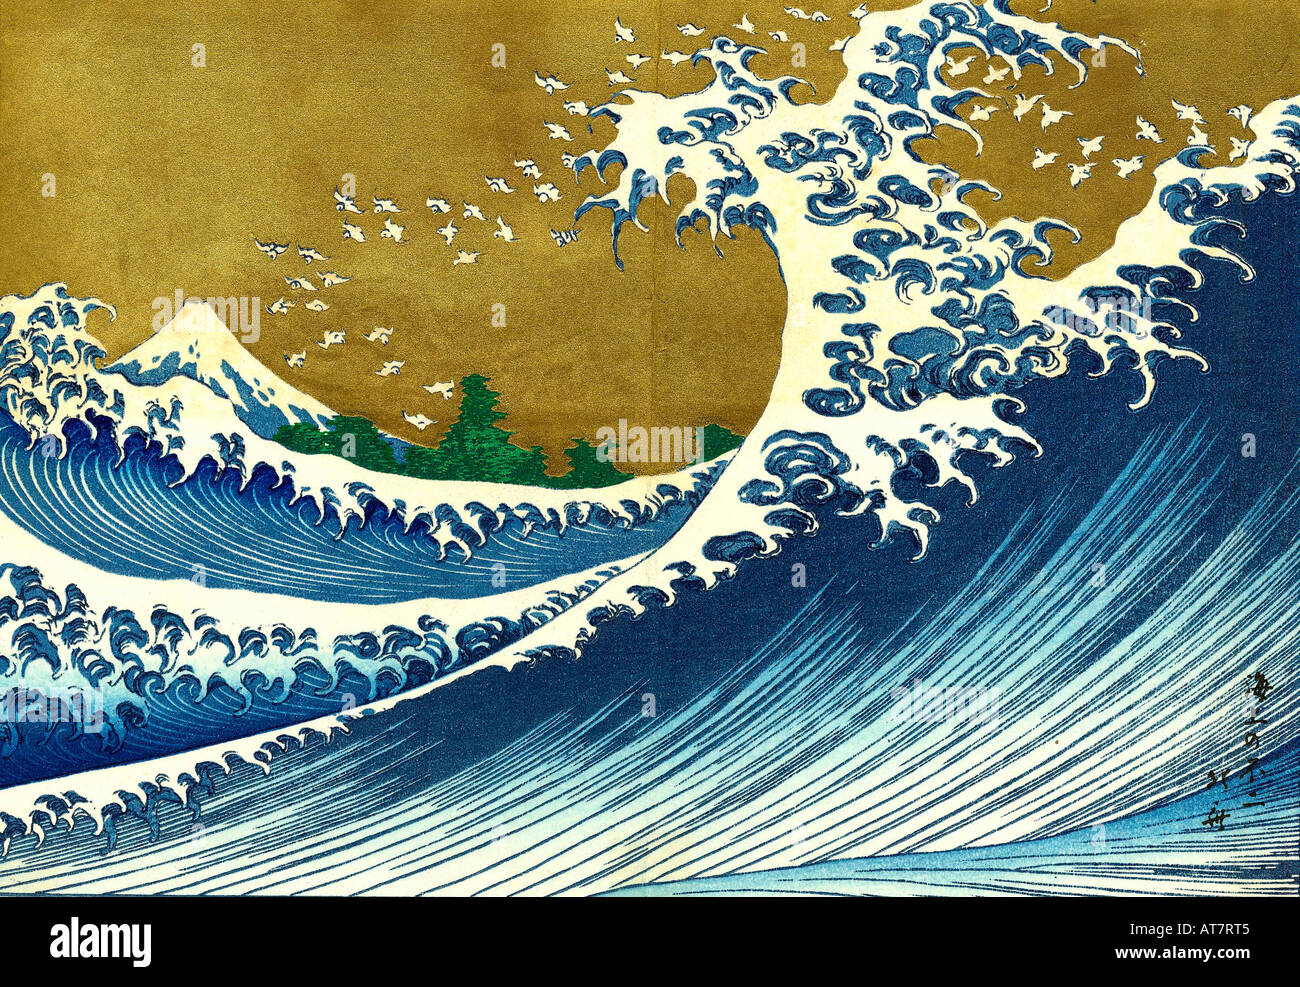 Giapponese wooddblock colore stampa da 100 vedute del Fuji da Katsushika Hokusai Foto Stock